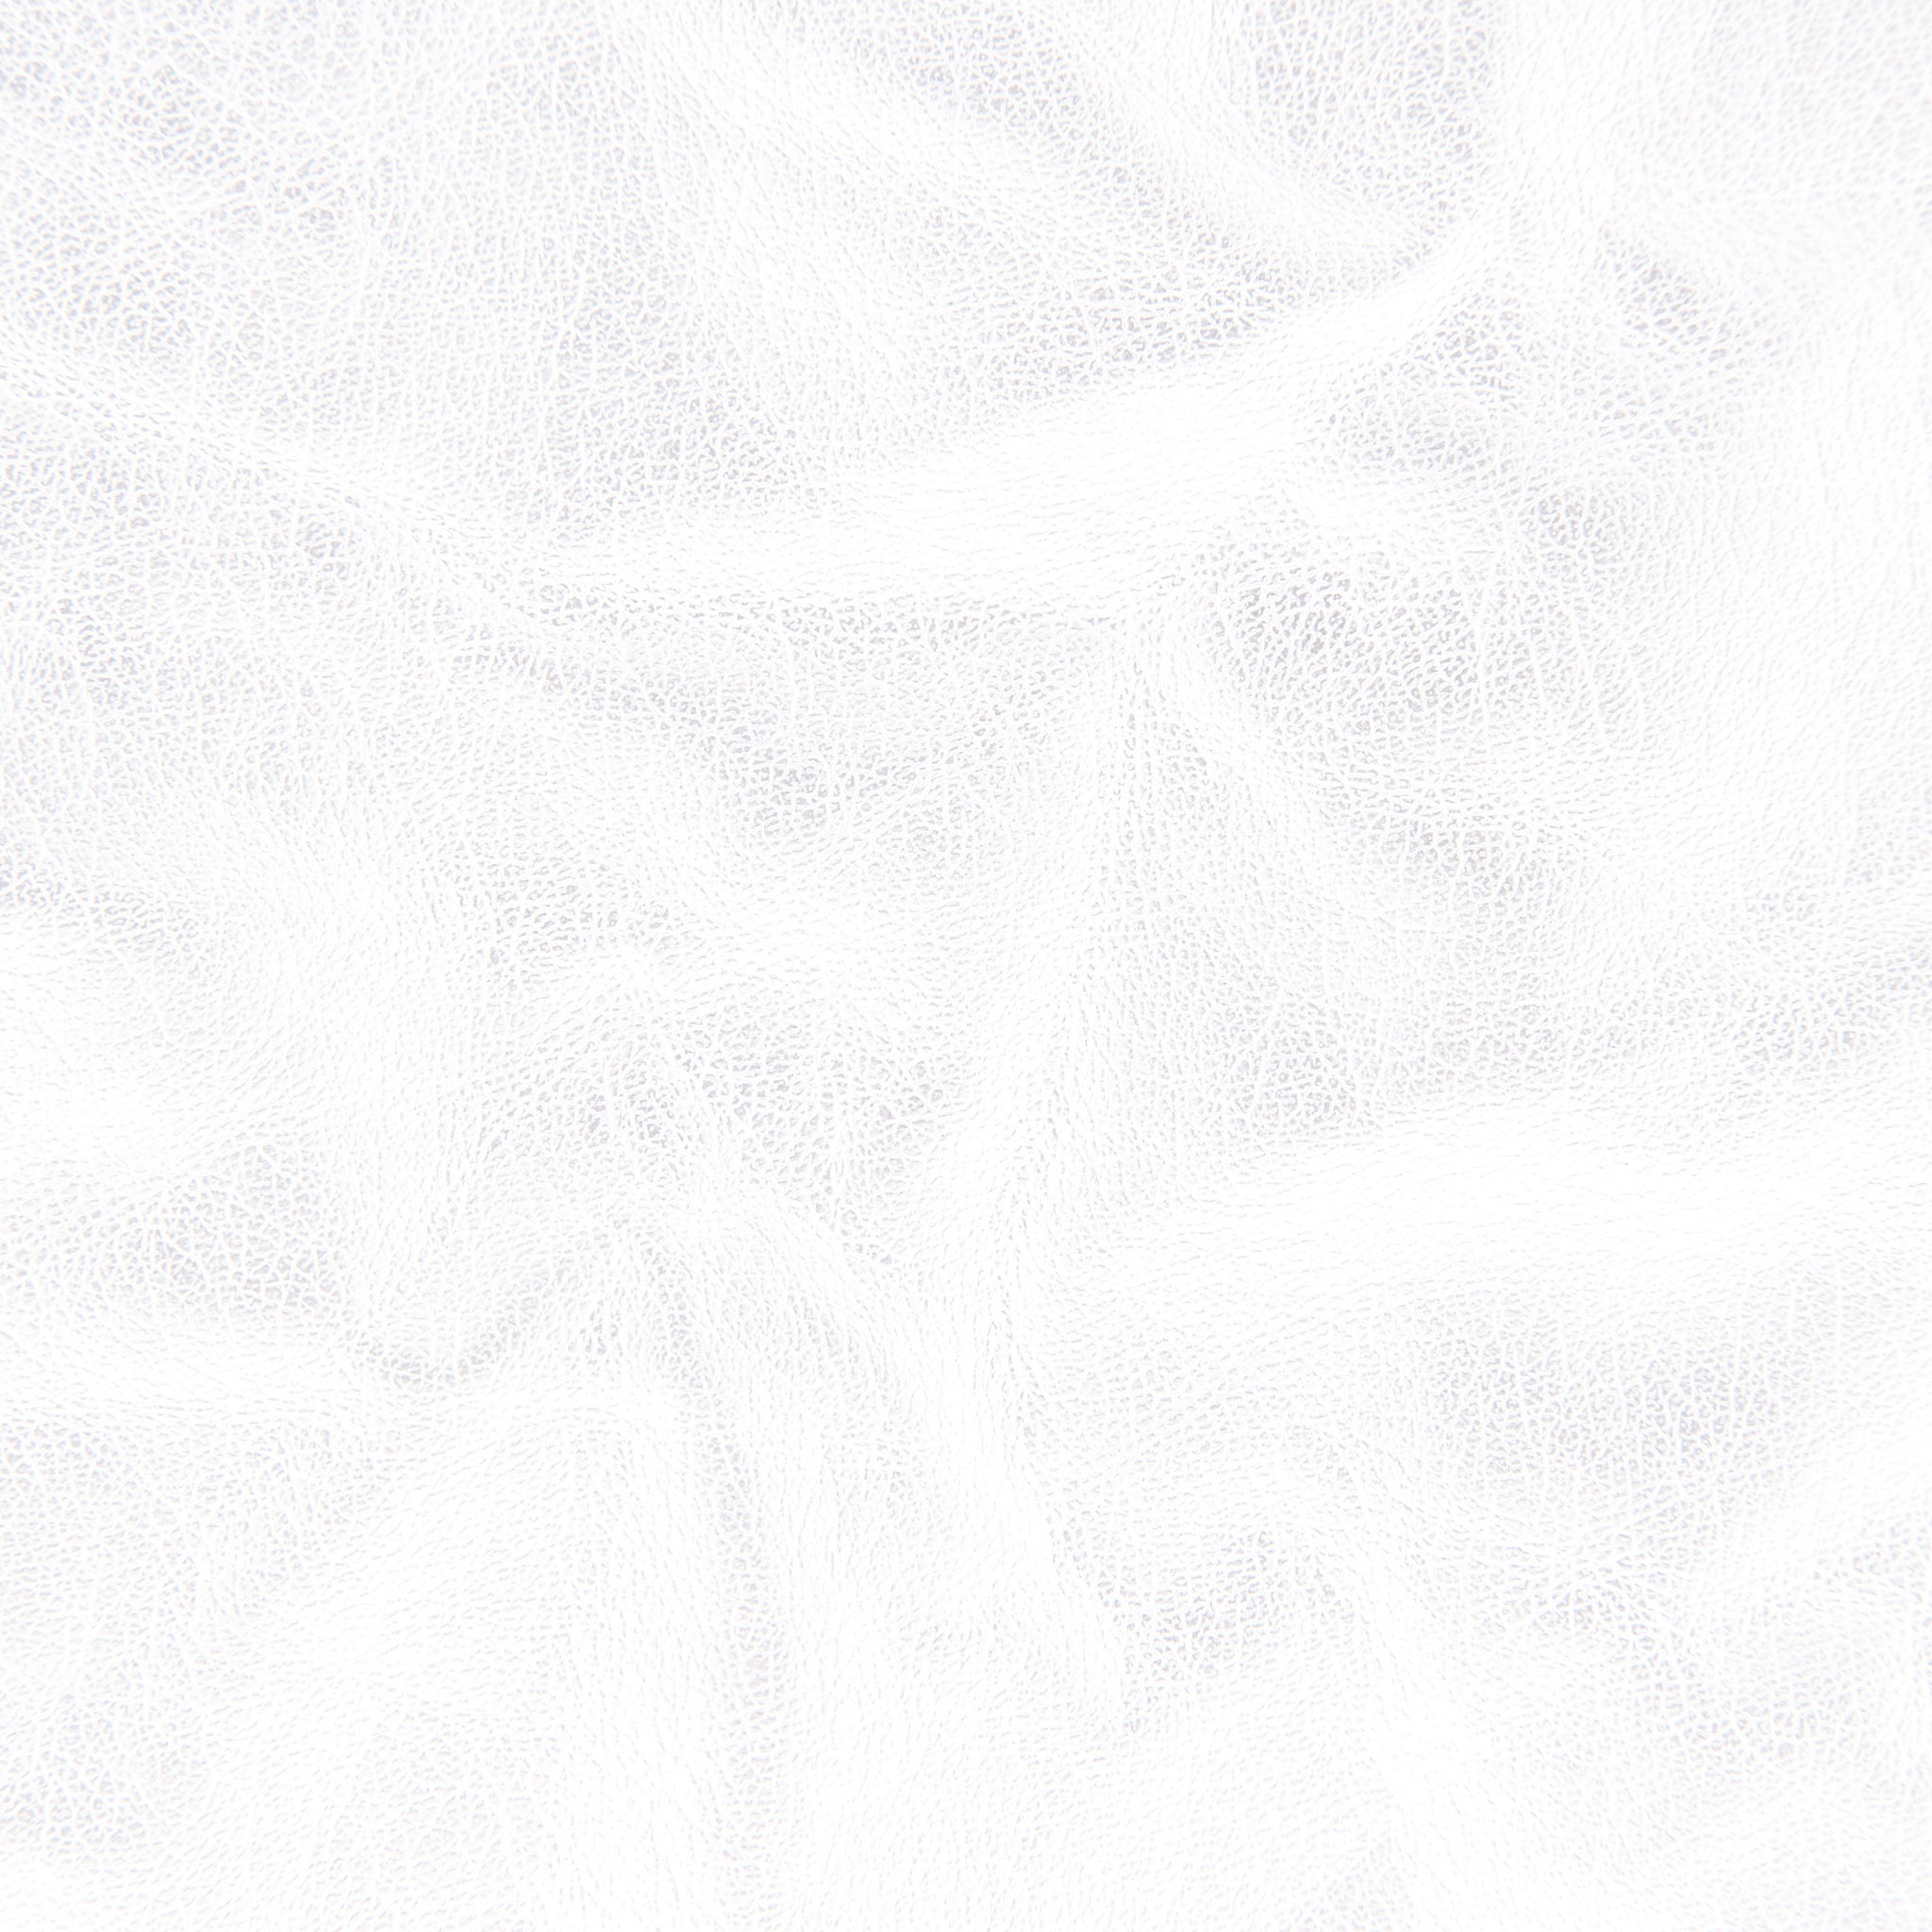 FREEIOS7 white leather   parallax HD iPhone iPad wallpaper